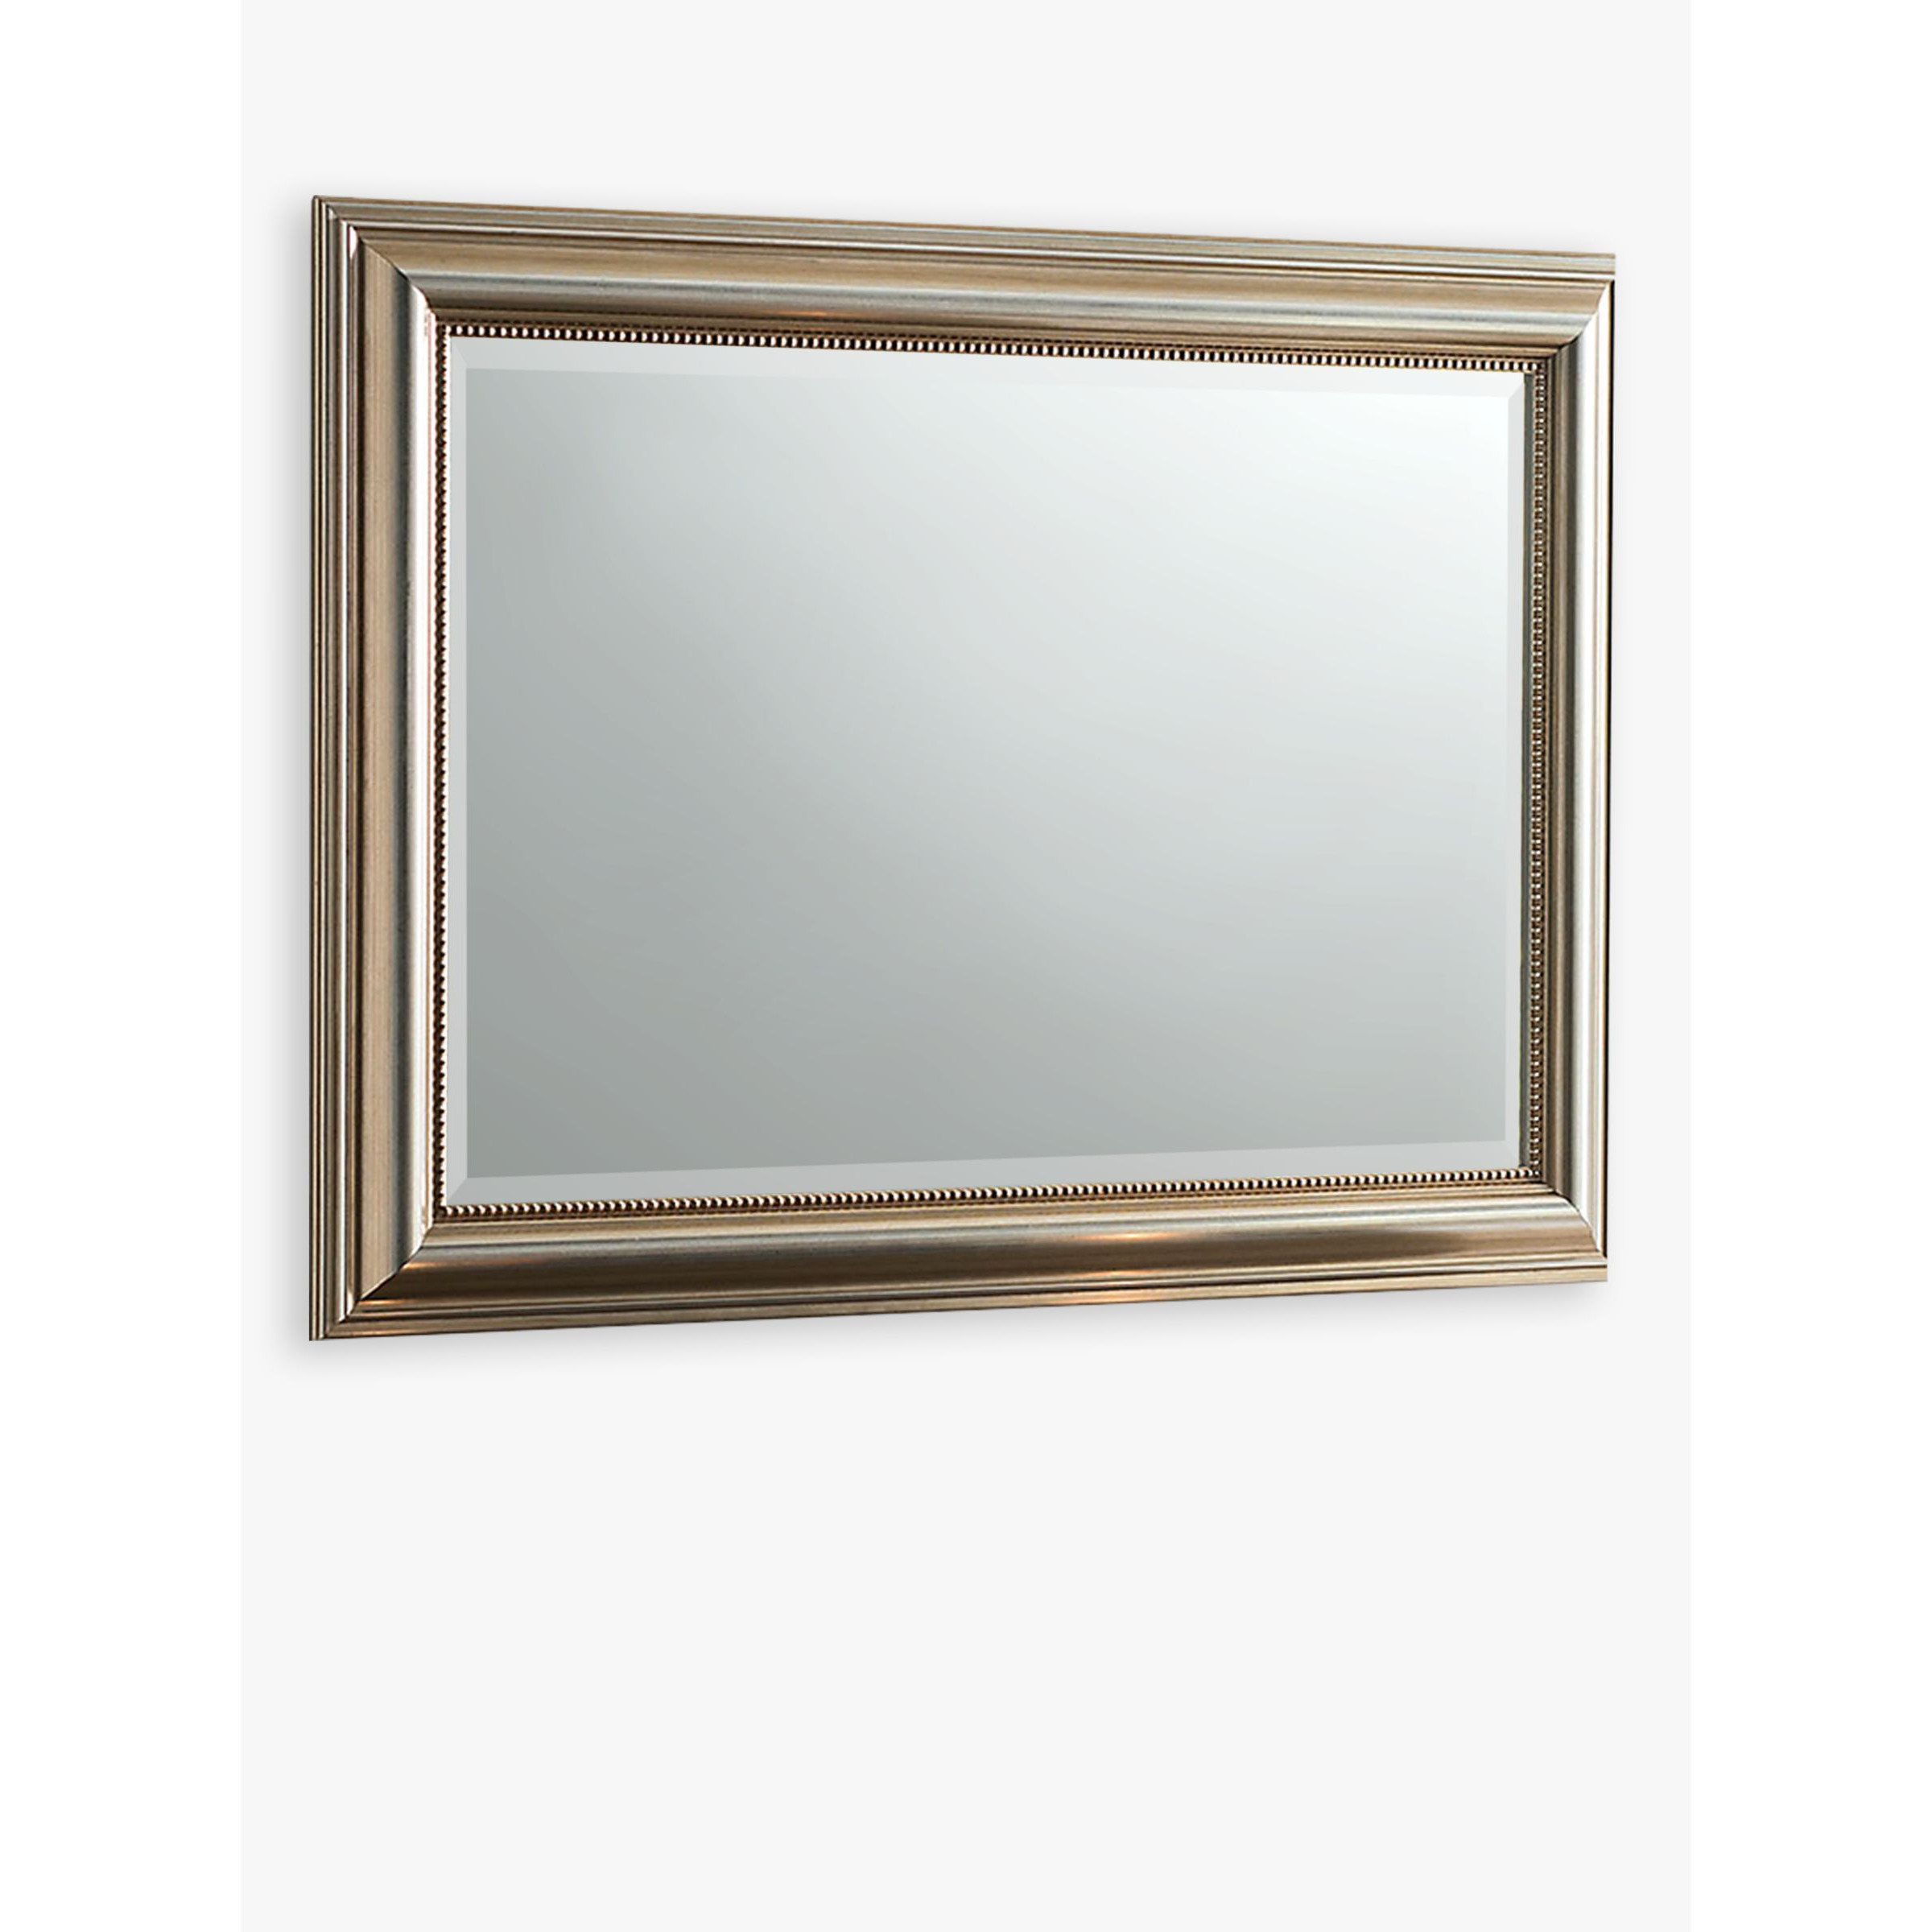 Yearn Beaded Rectangular Wall Mirror, 69 x 94cm, Champagne - image 1